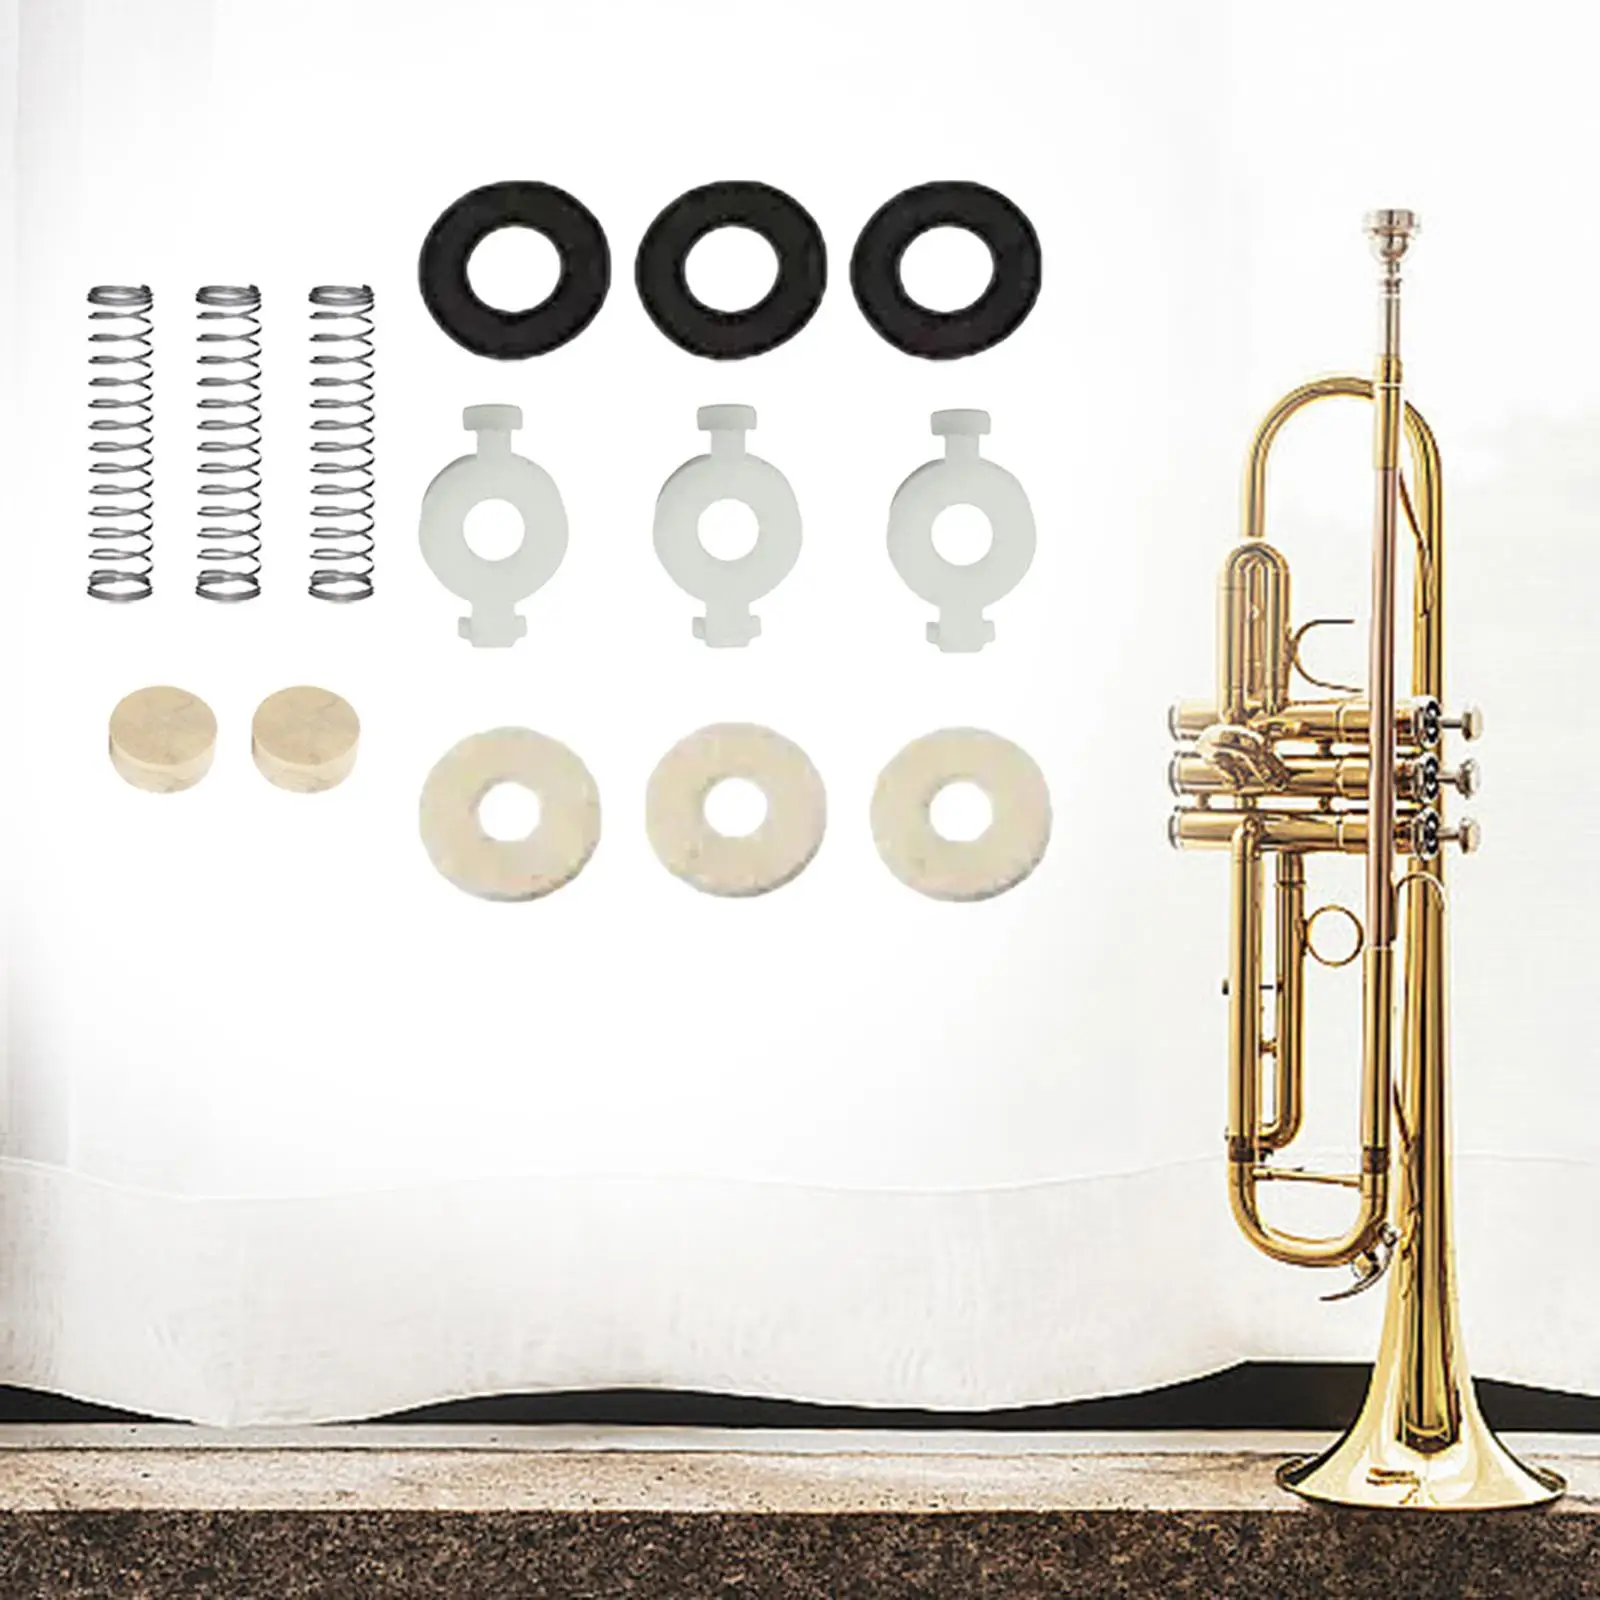 Trumpet Repair Kits Portable Easy to Install Trumpet Accessory Metal Musical Instrument Felt Washers Cork Pad Trumpet Repairing